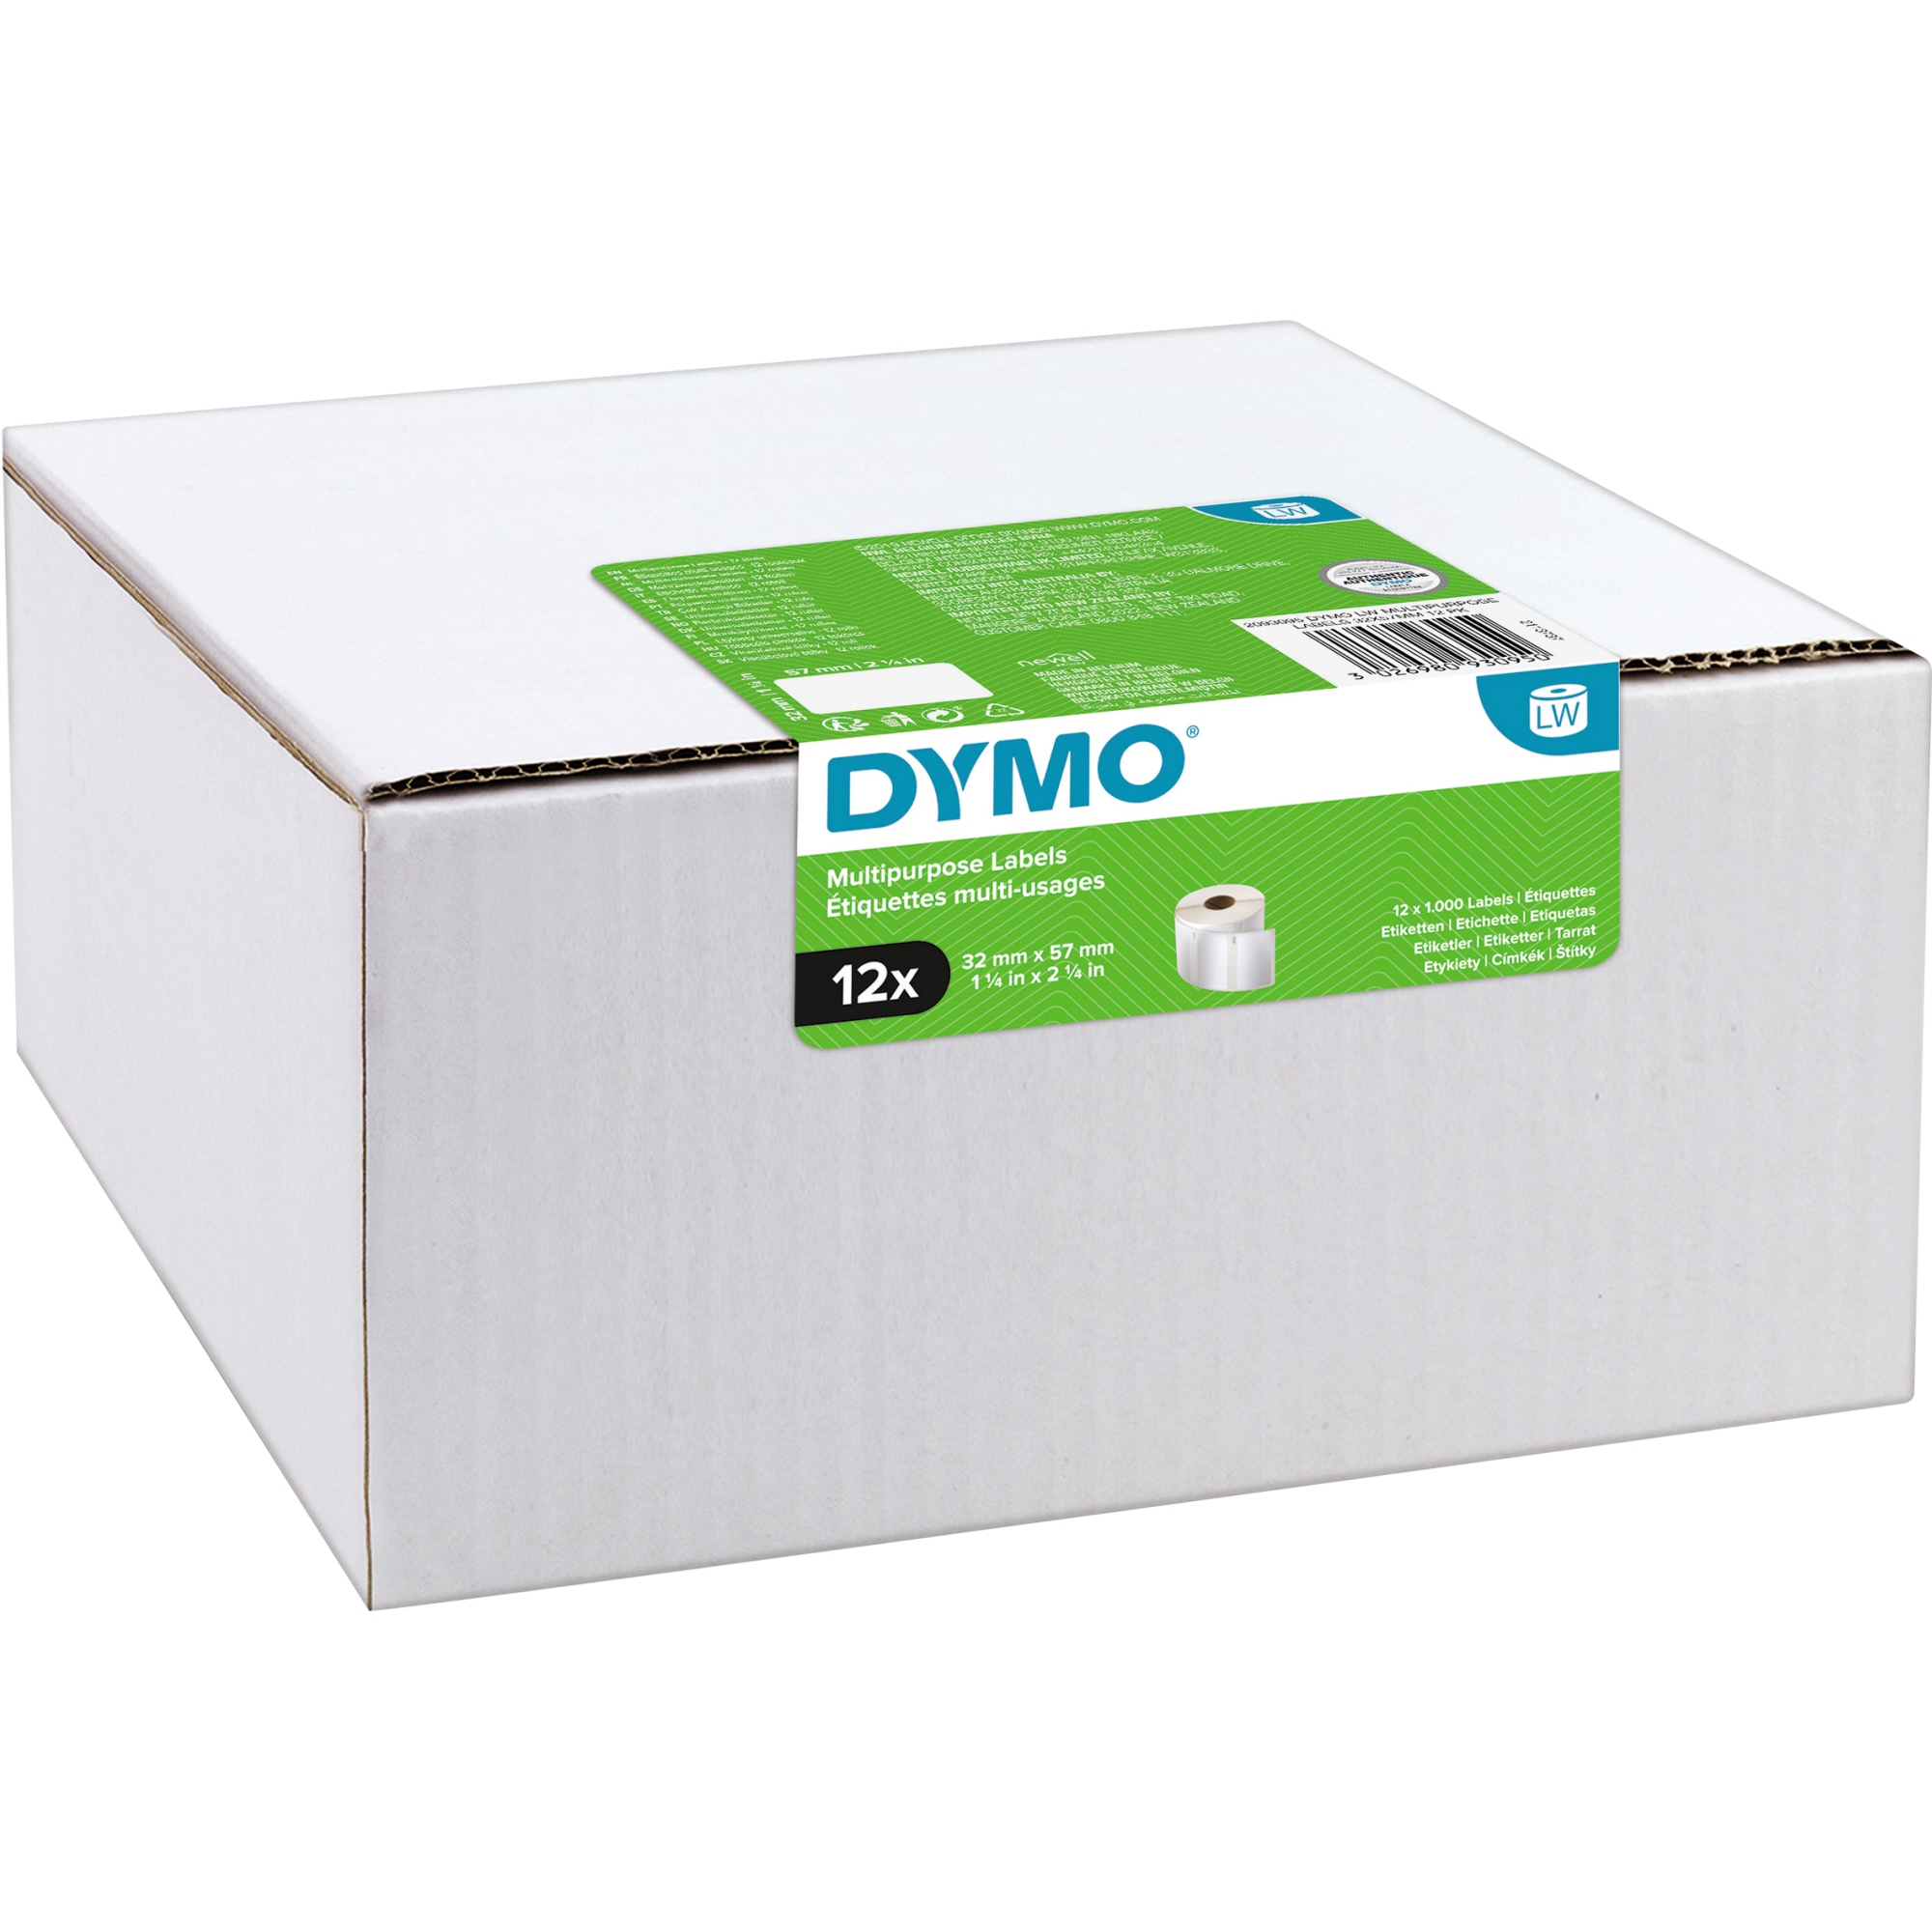 DYMO® Etikett LW 32 x 57 mm 12 Rl./Pck.